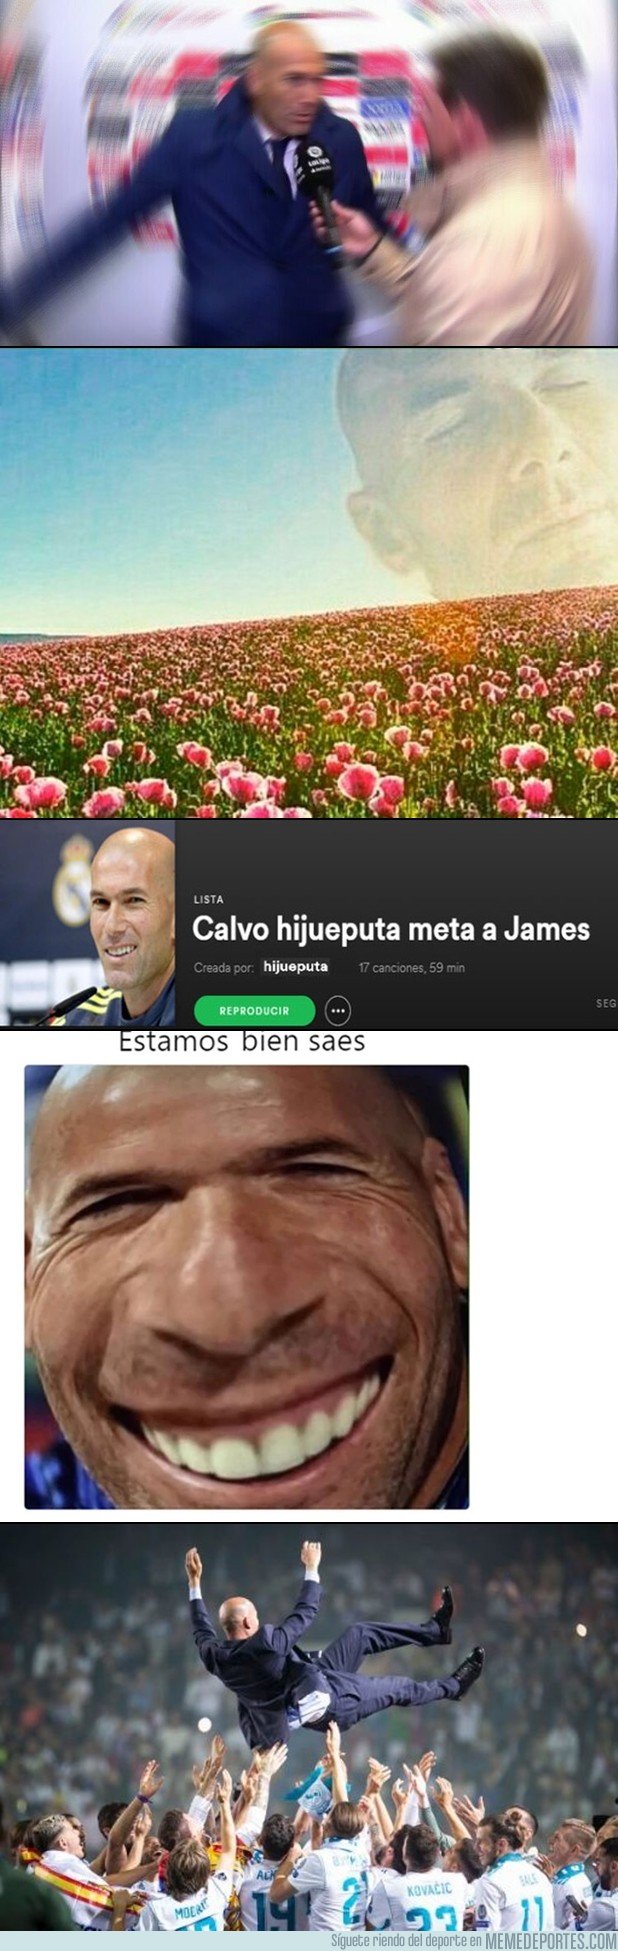 1036138 - Zidane, se te echará de menos por aquí